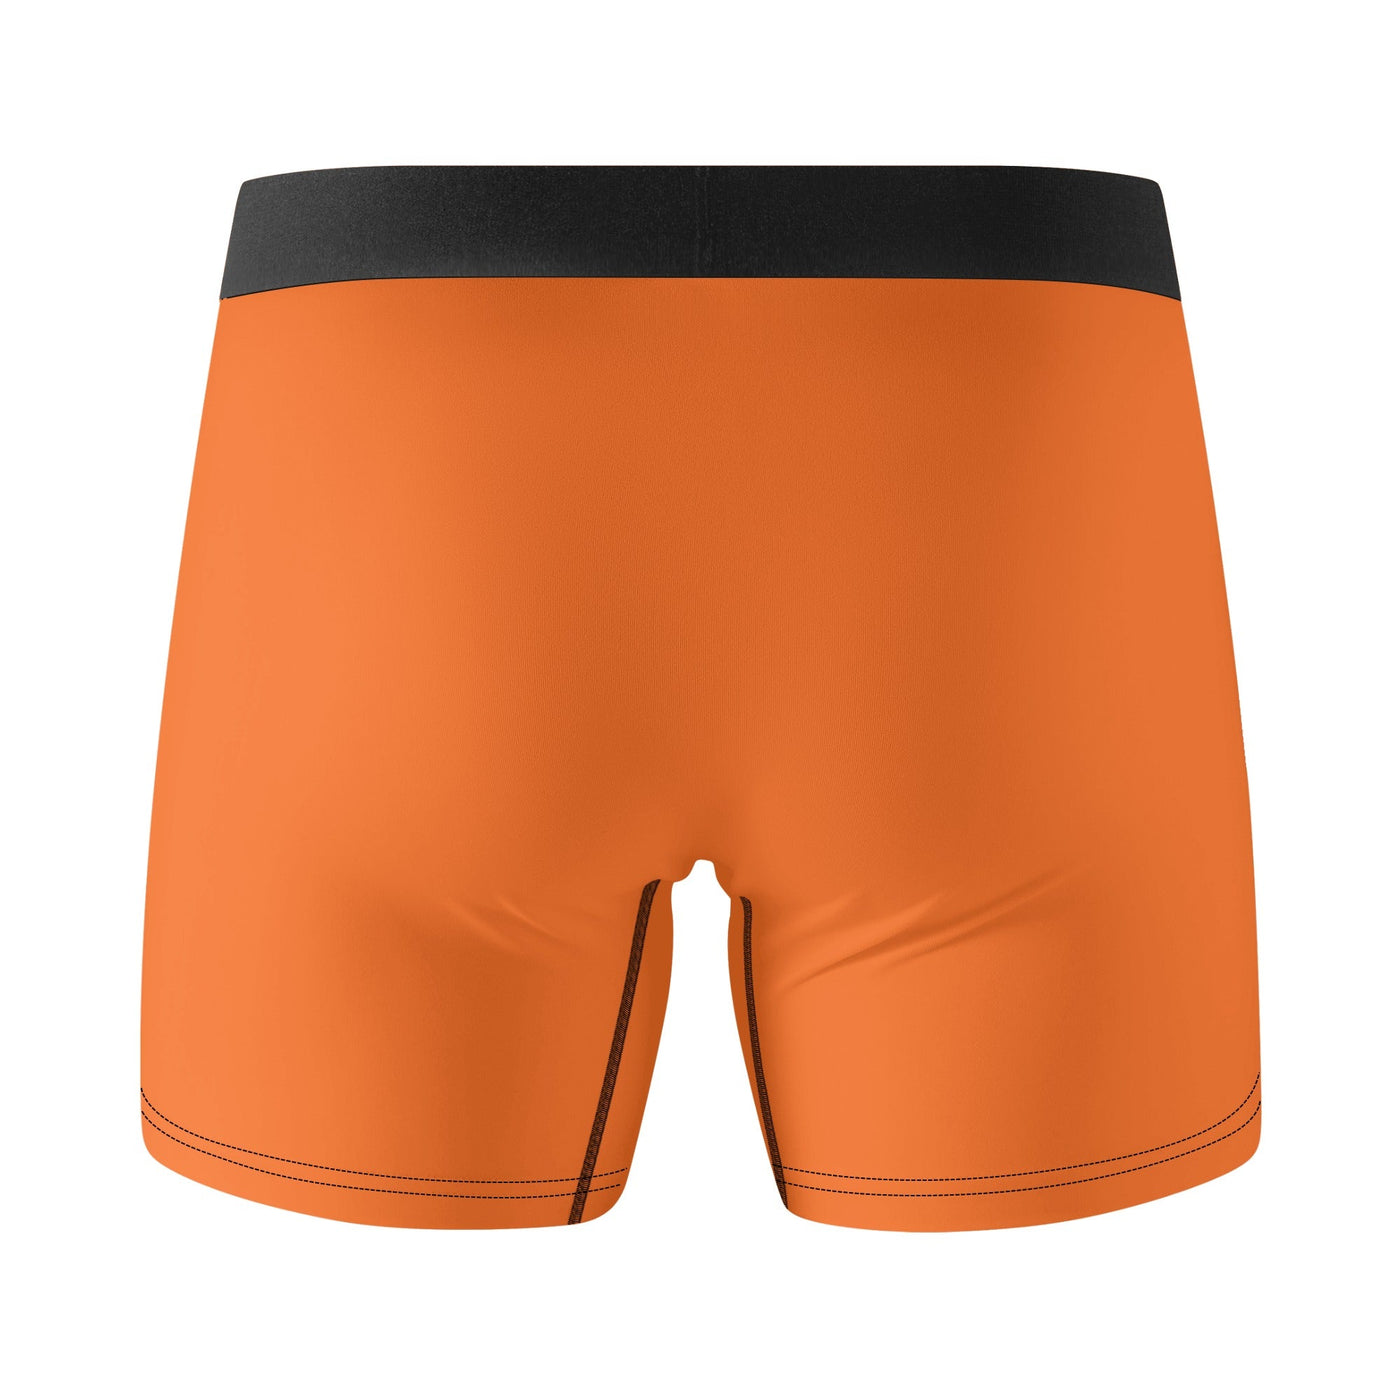 Dutch Holland National Team KNVB | Netherland Retro Soccer Men's Underwear